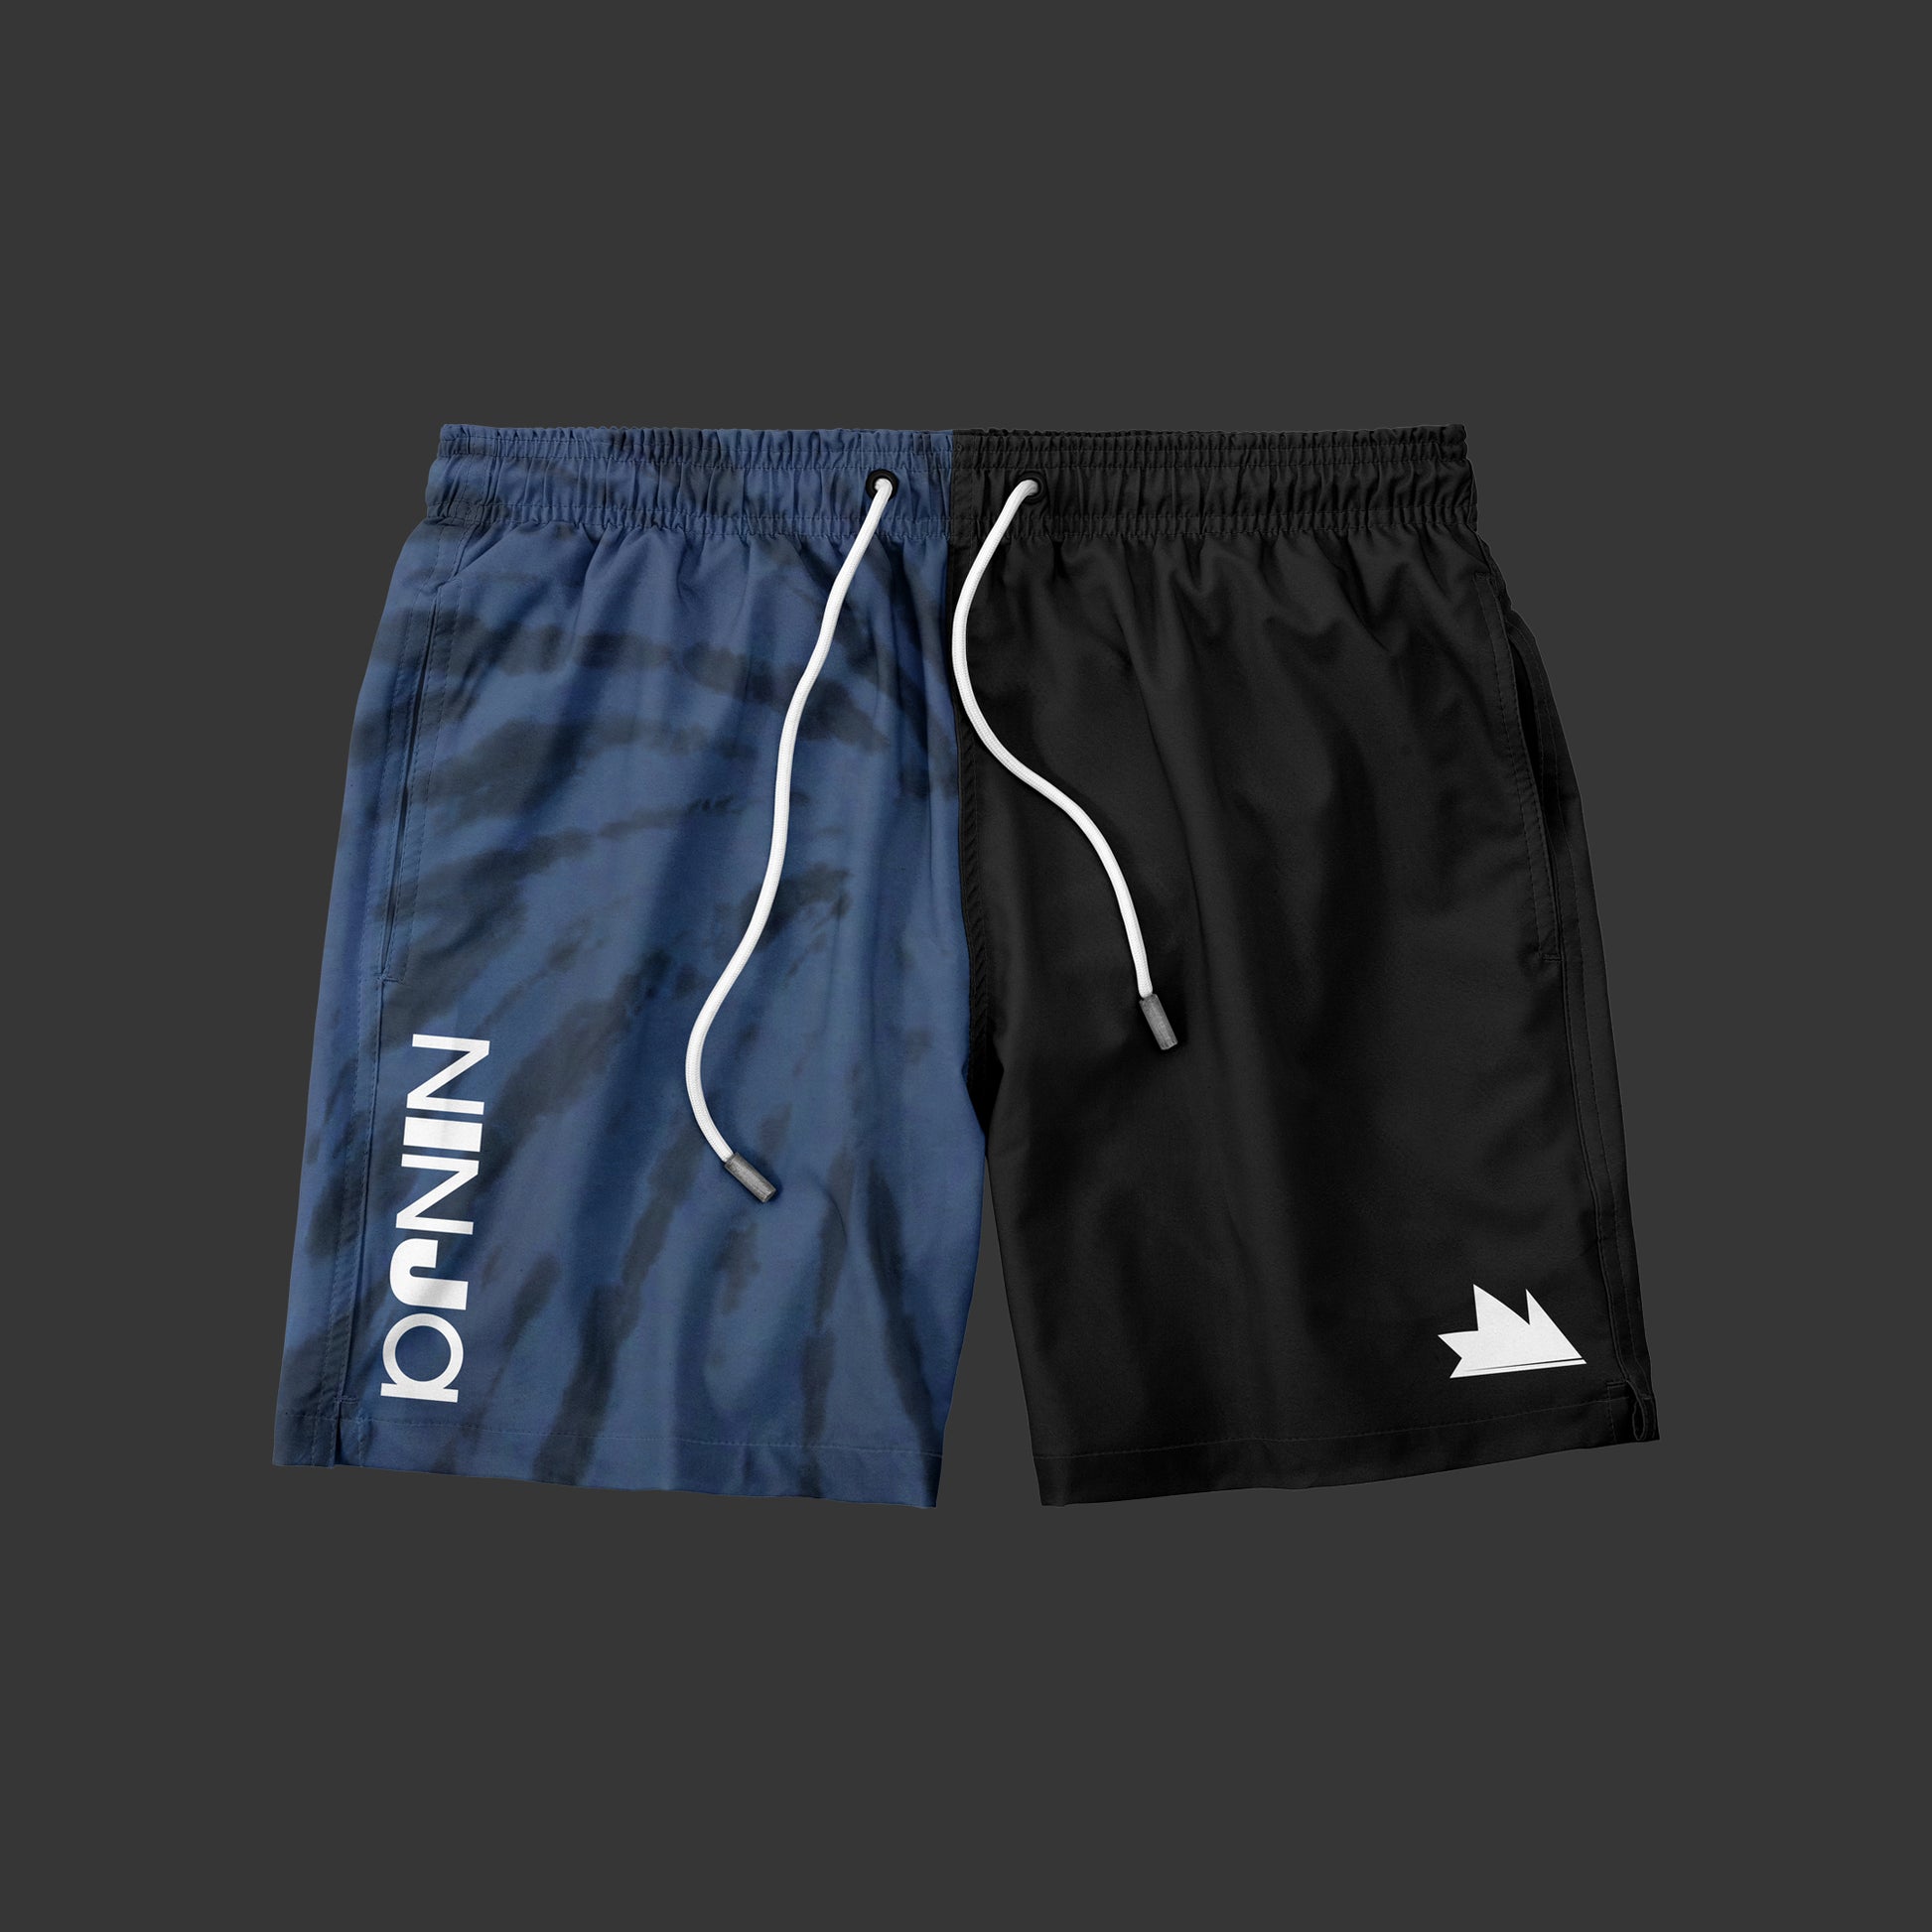 Ninja Navy/Black Colorblock Shorts